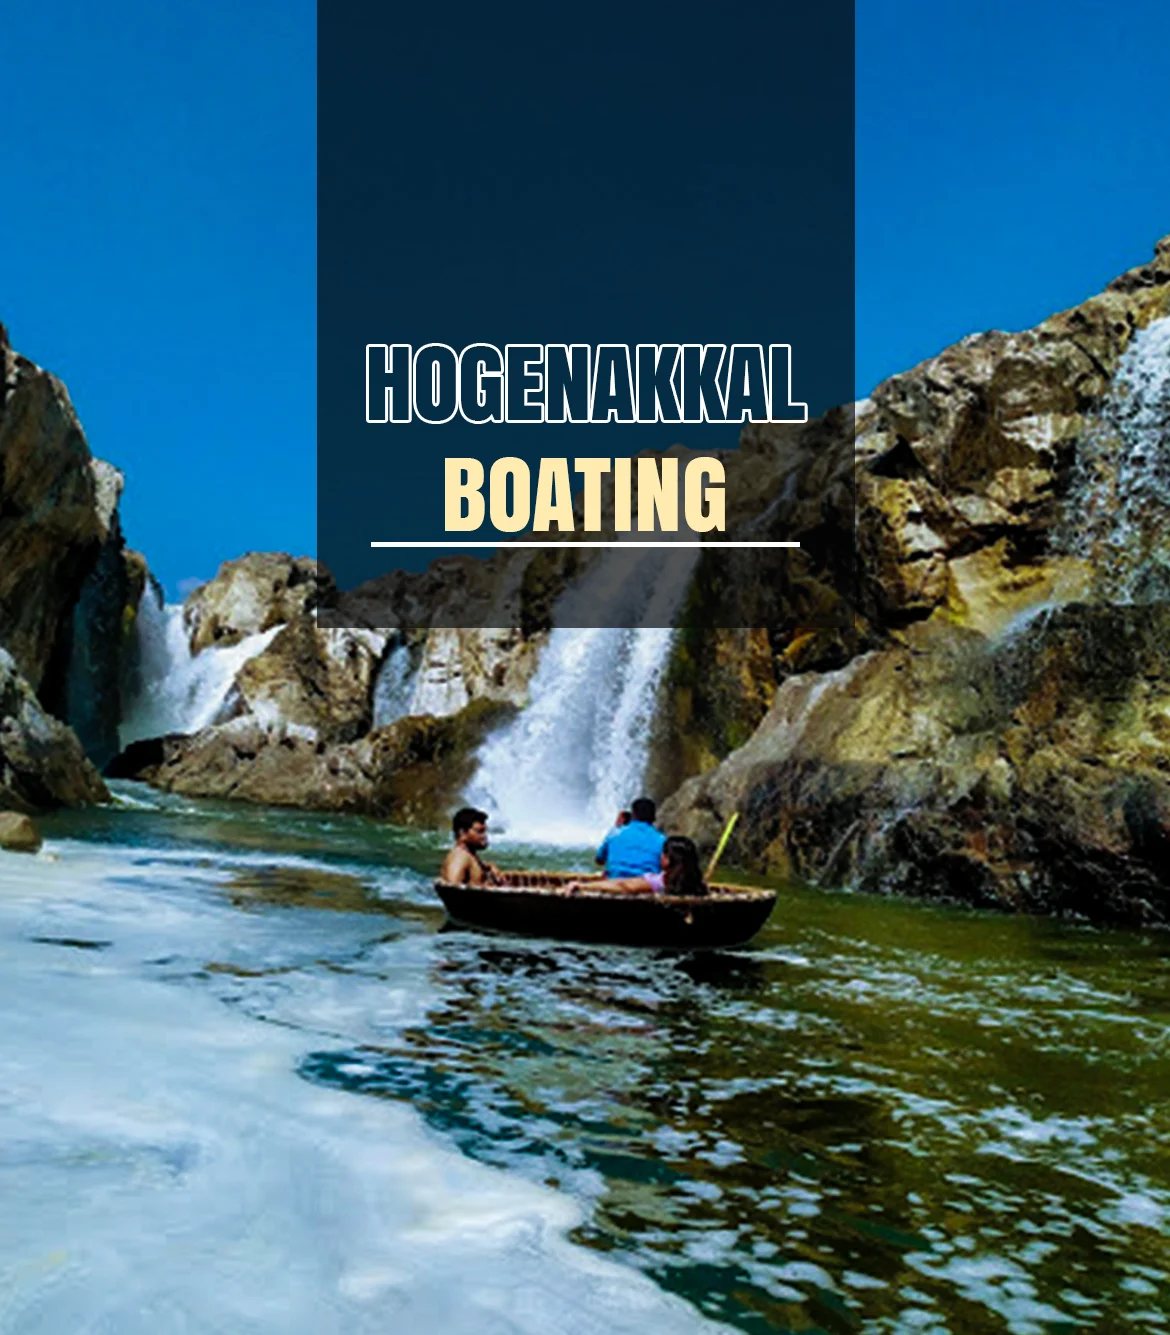 Hogenakkal Boating